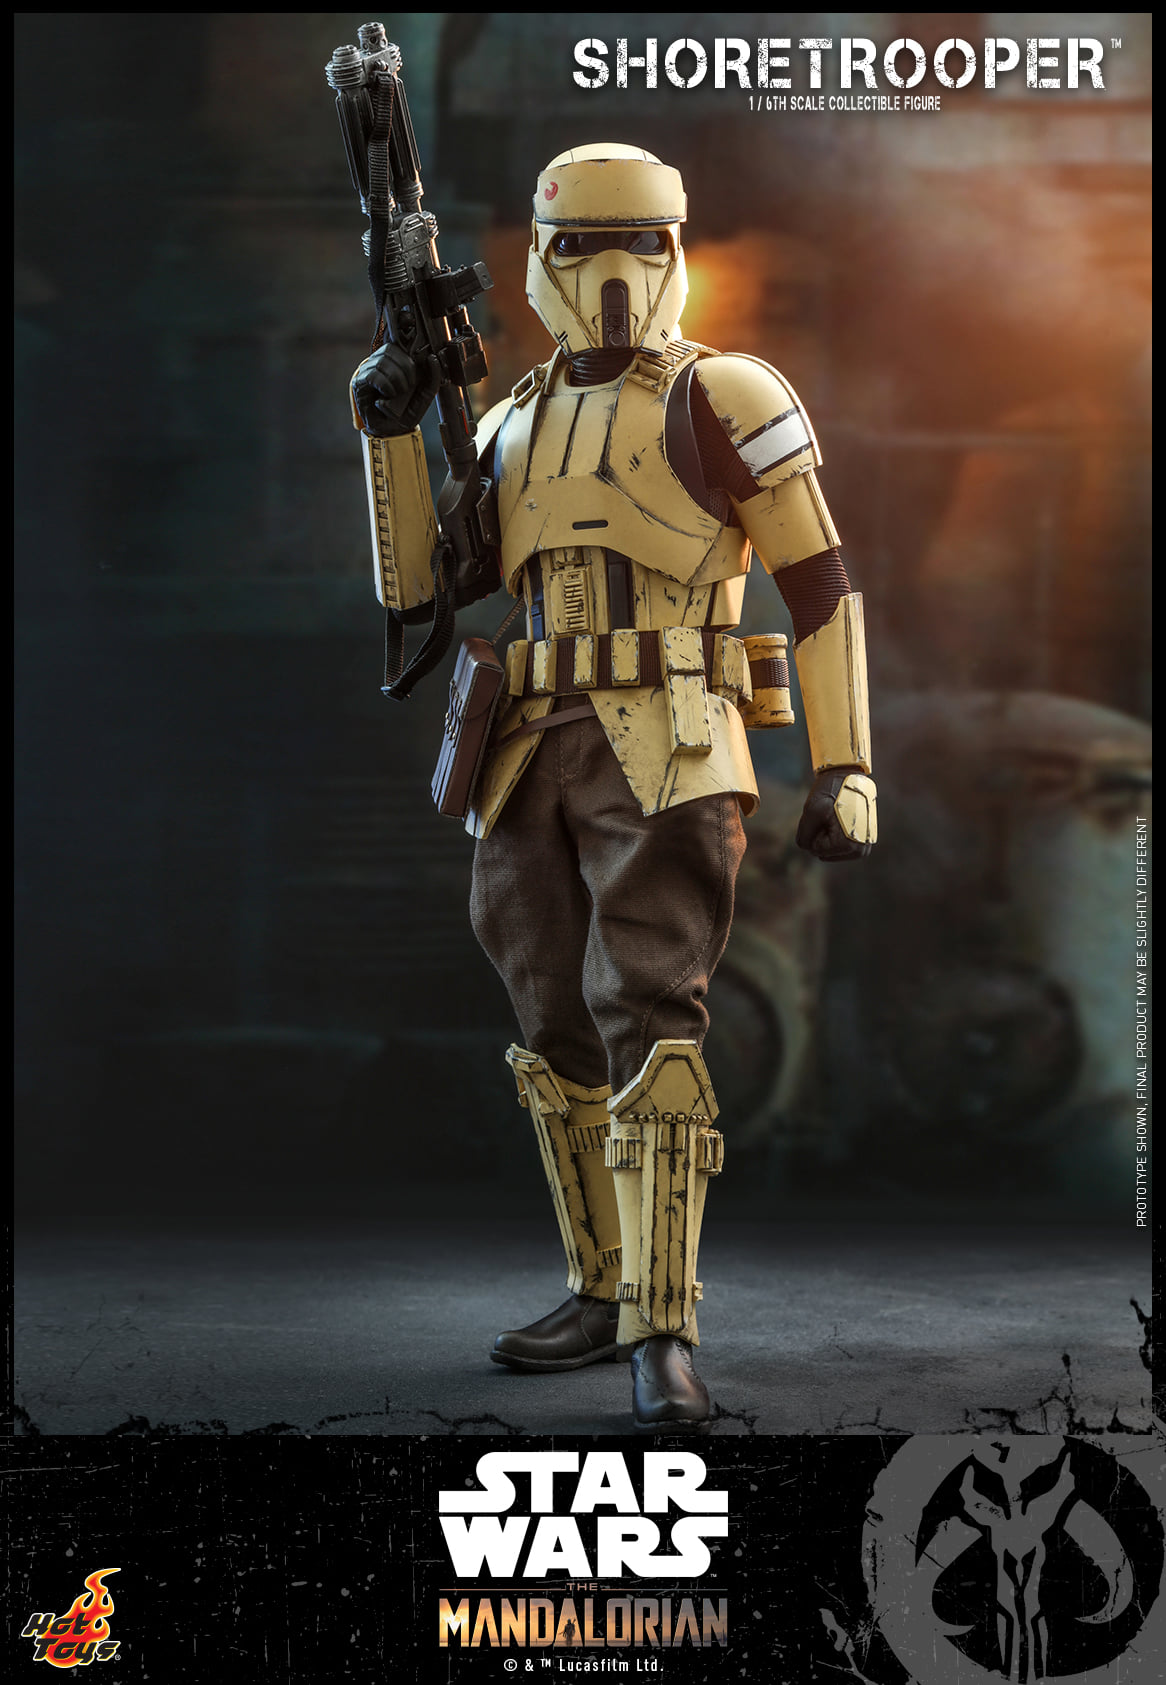 Pre-Order Hot Toys Star Wars Shoretrooper Mandalorian Figure